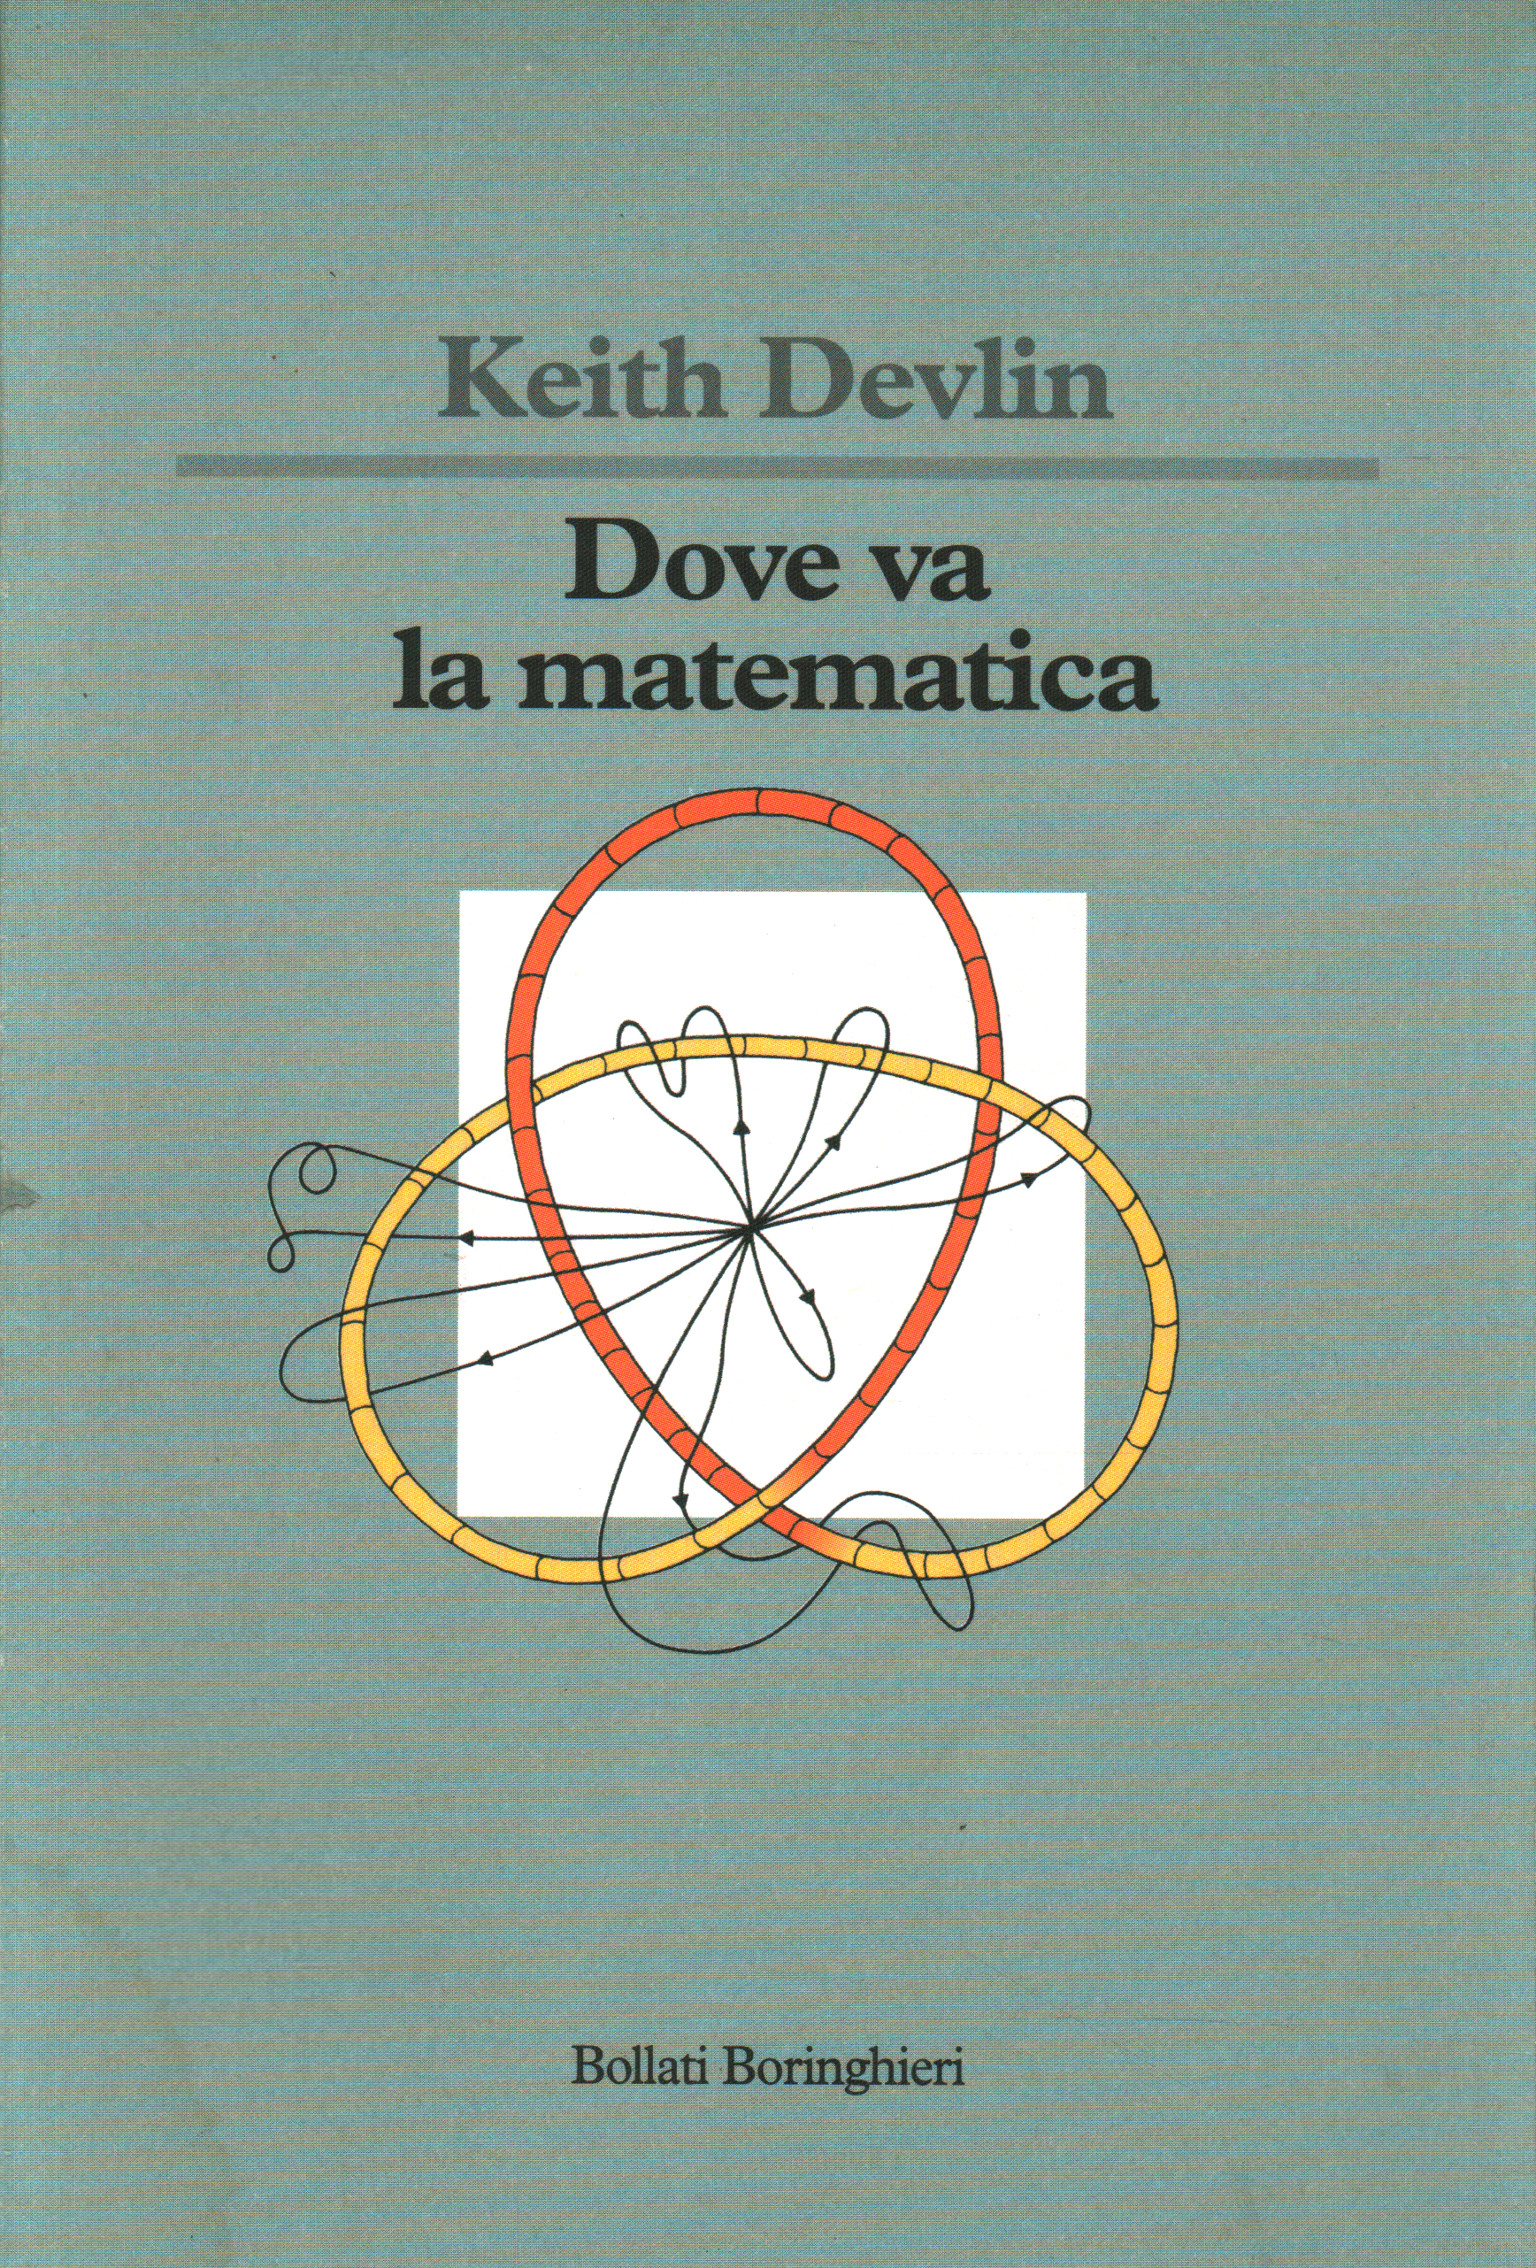 Where does the math go, Keith Devlin